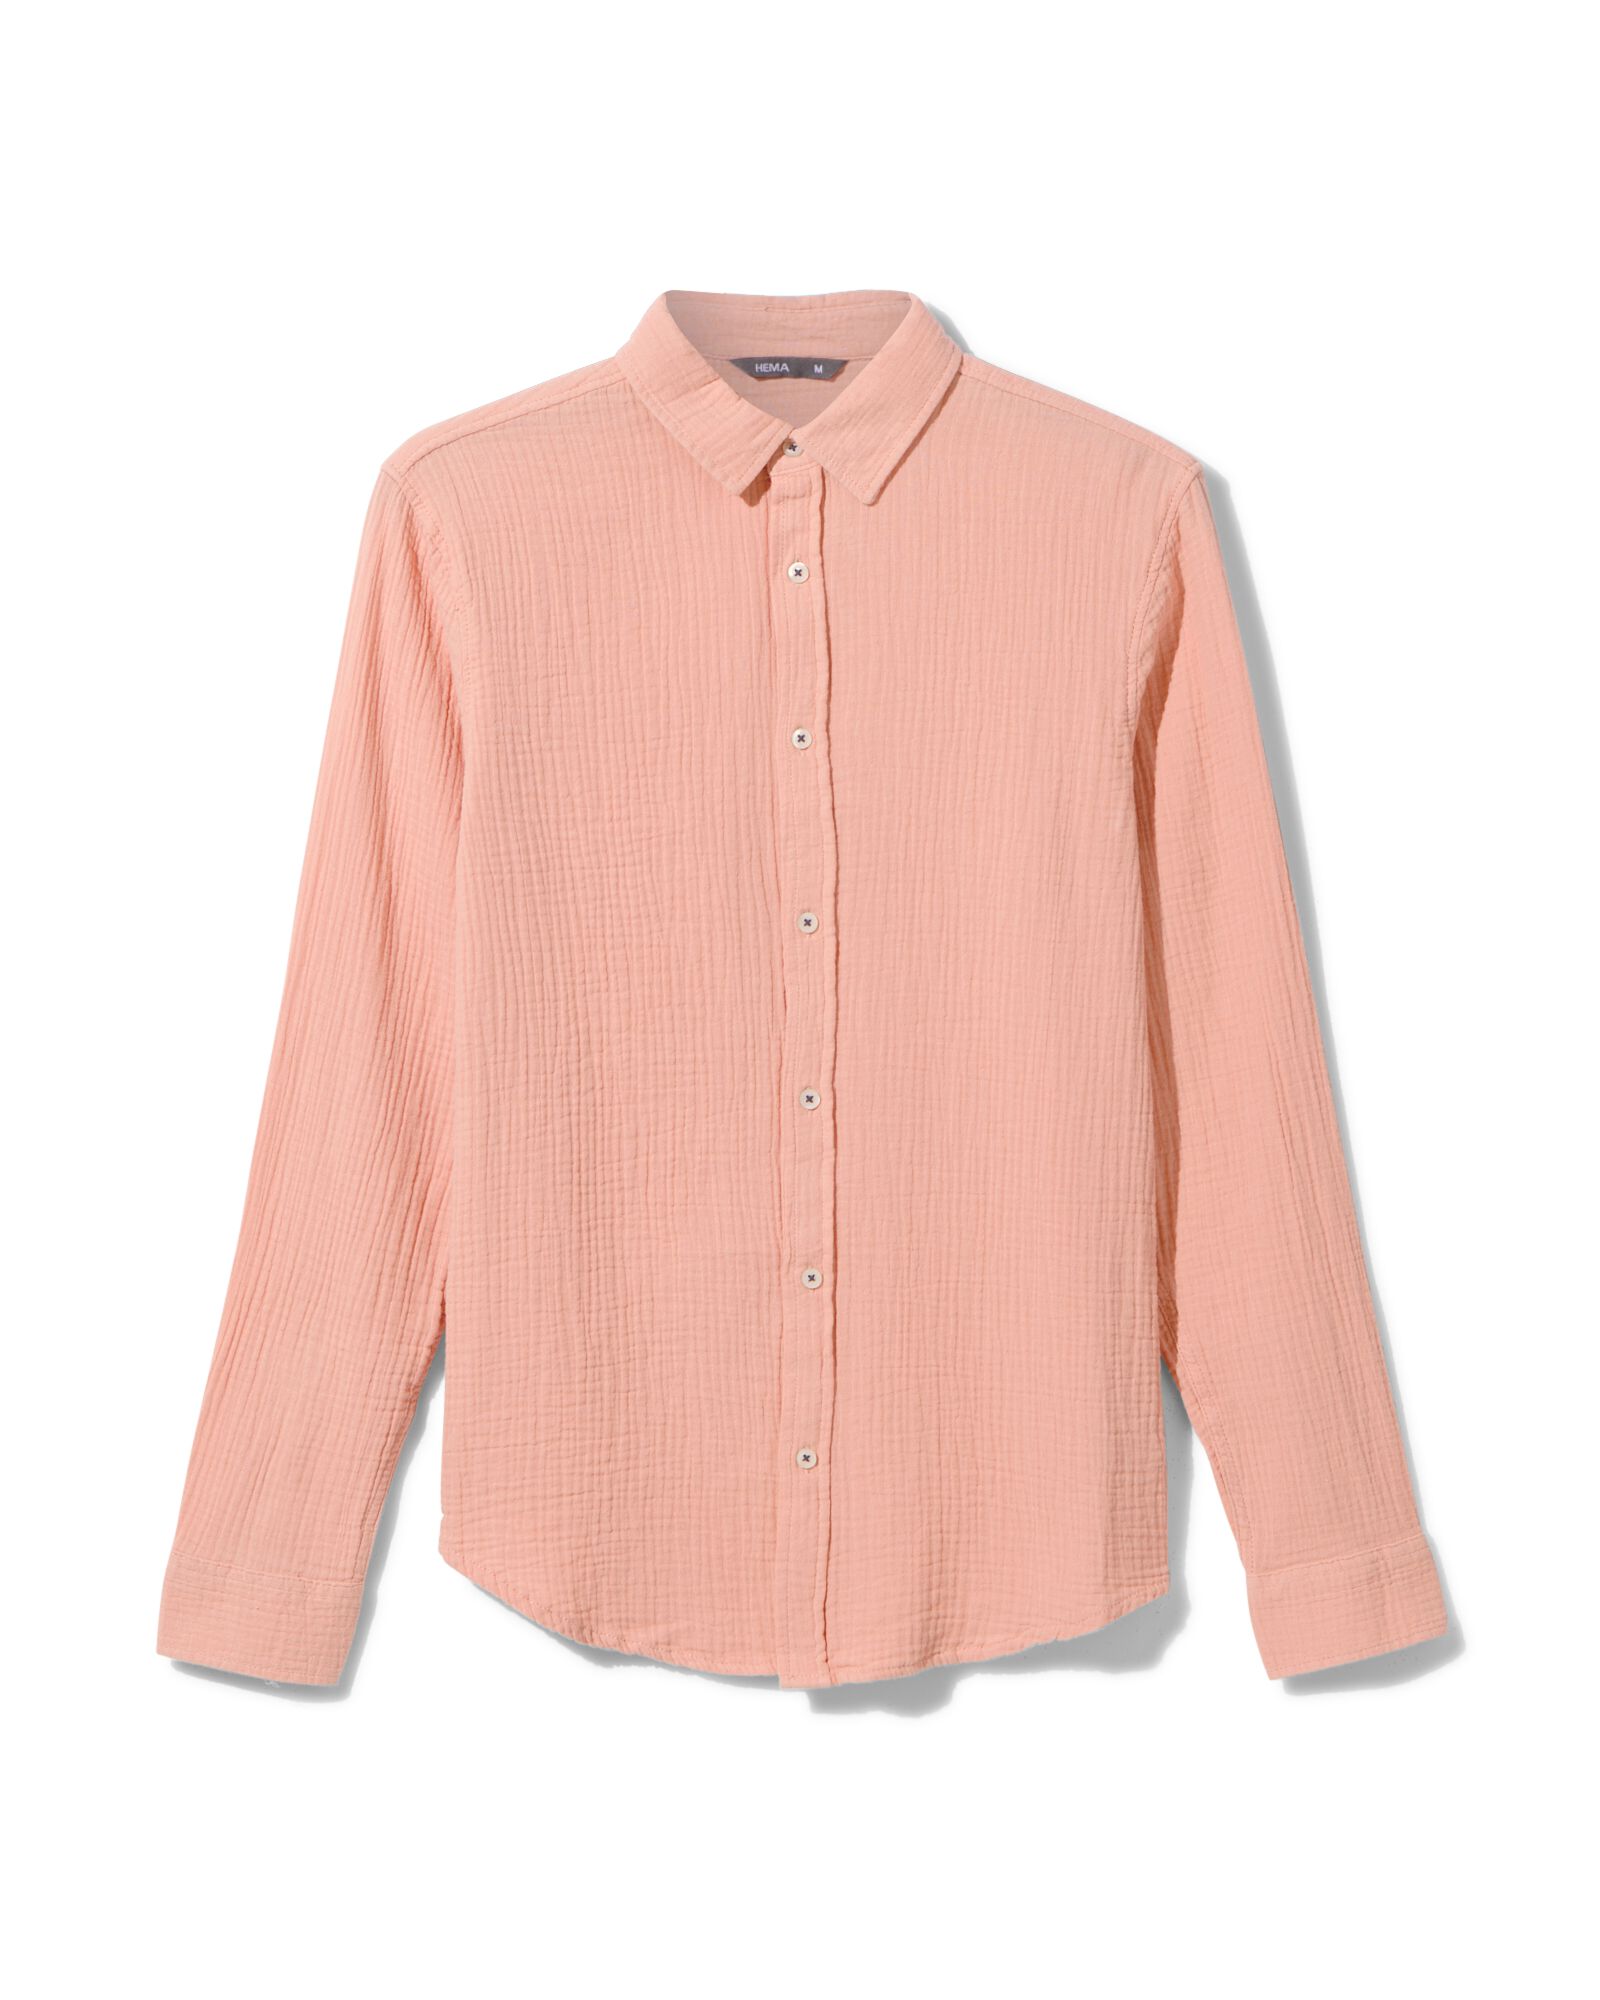 heren overhemd mousseline  roze L - 2108322 - HEMA